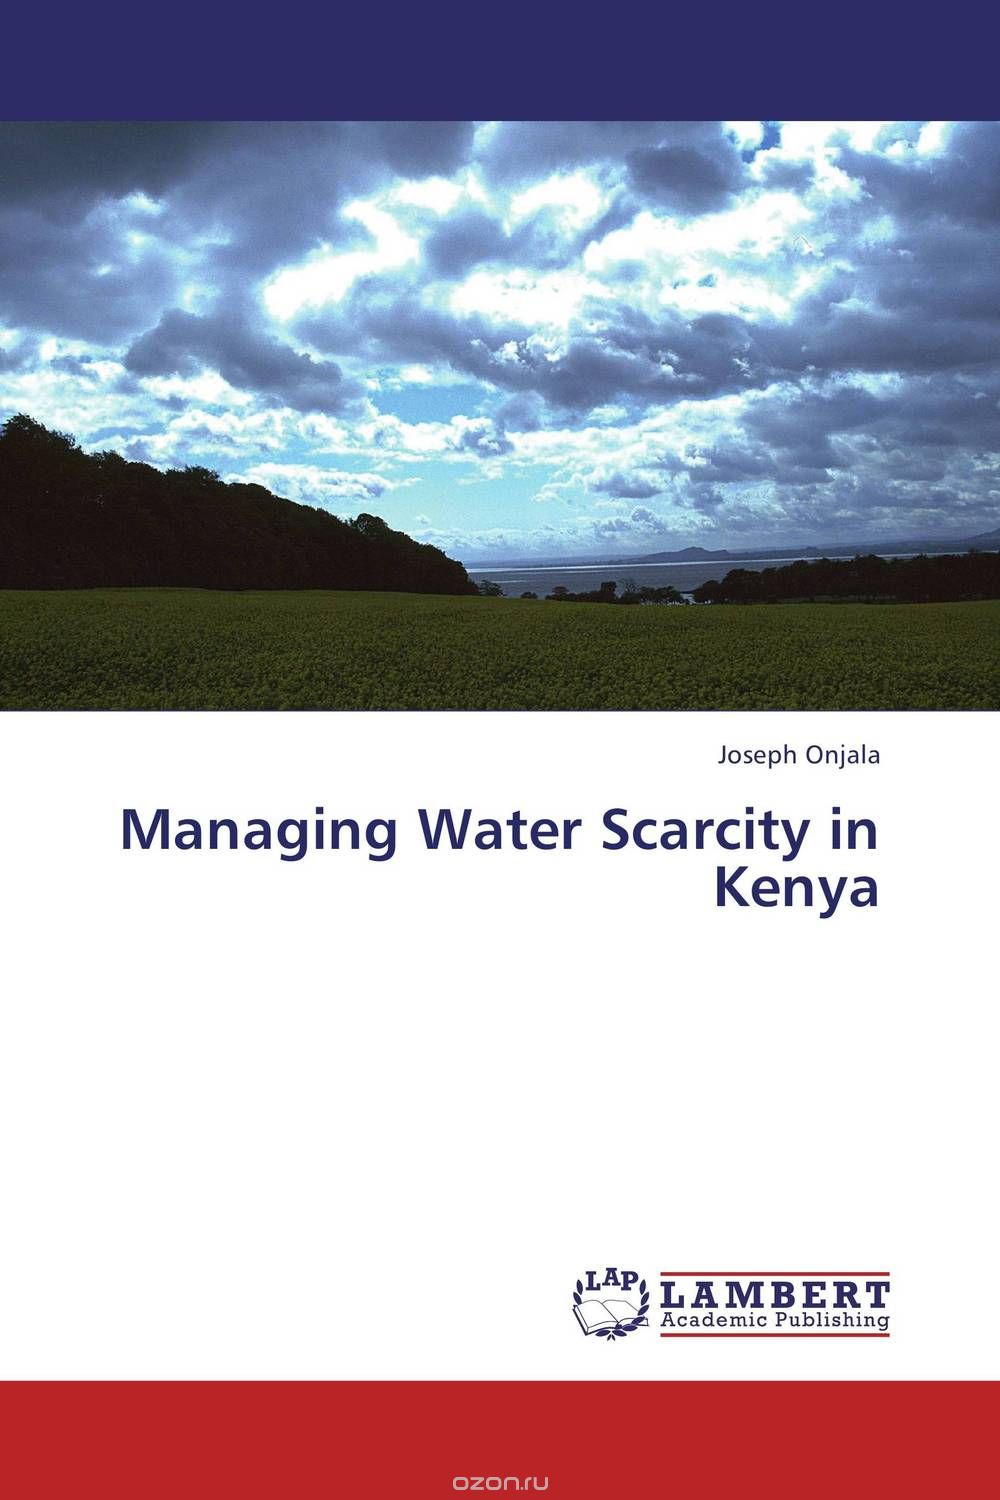 Скачать книгу "Managing Water Scarcity in Kenya"